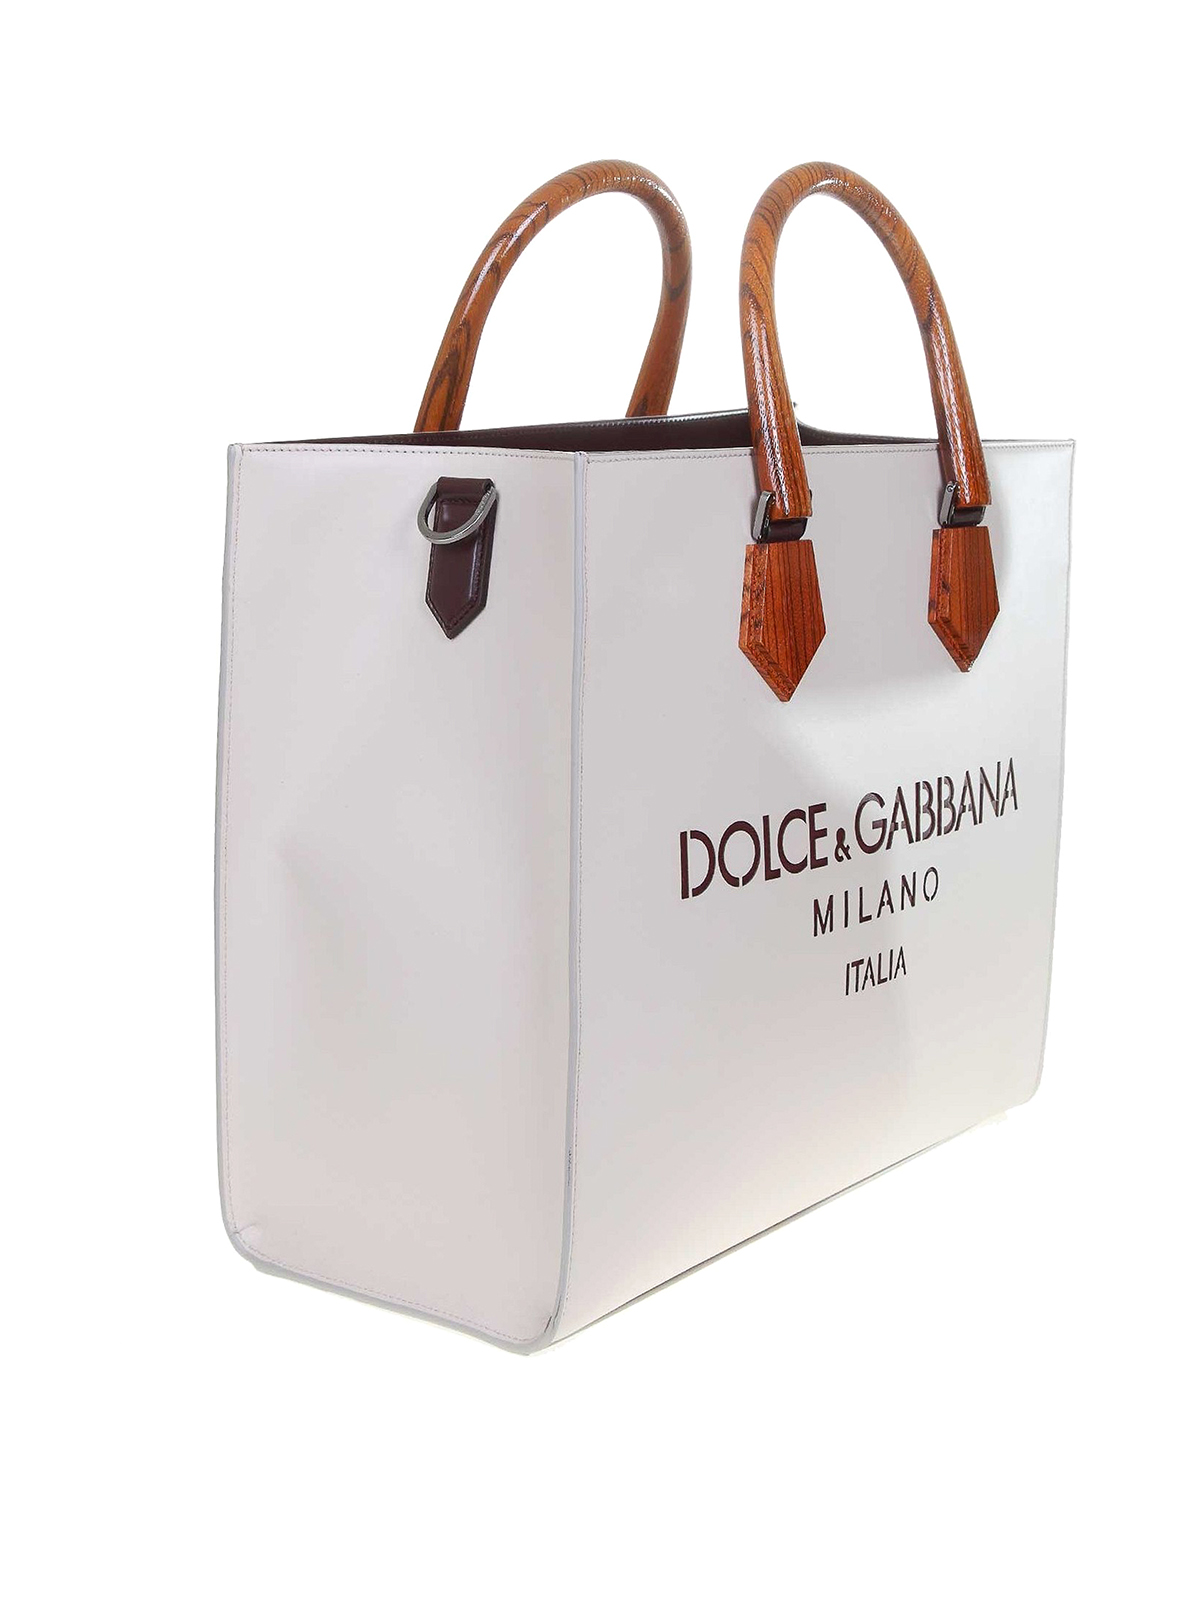 dolce and gabbana tote handbags